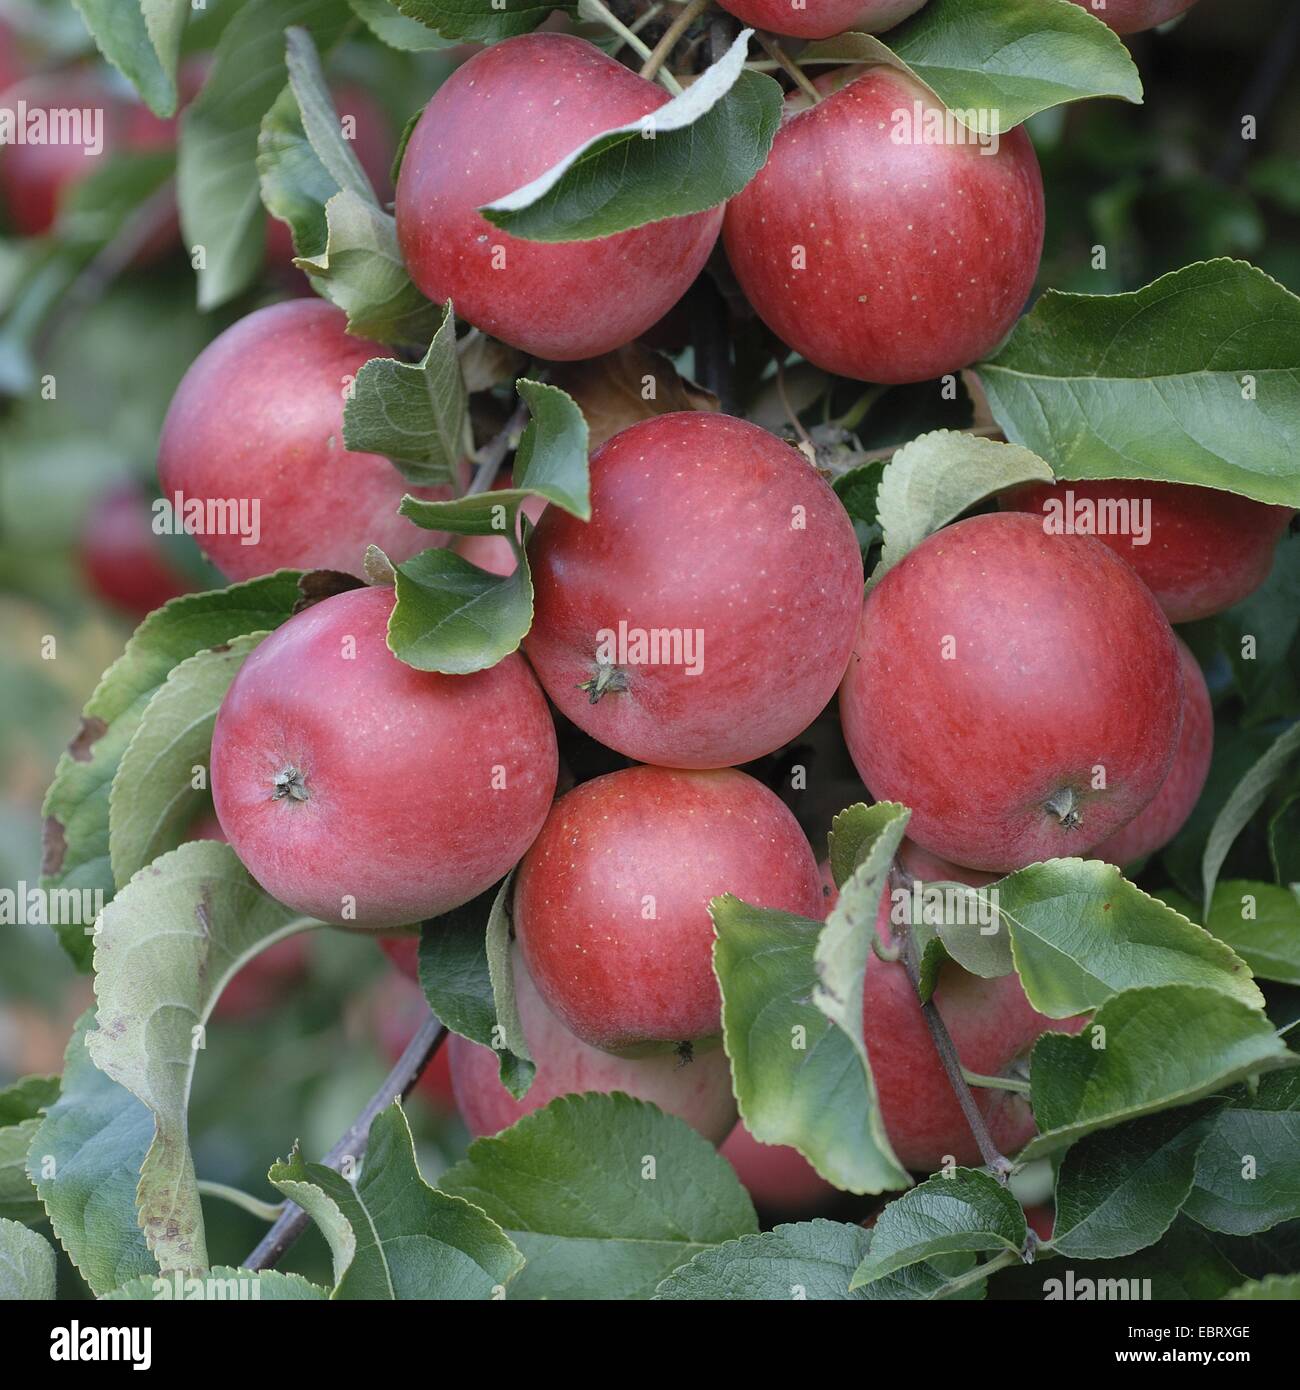 Apfelbaum (Malus Domestica 'Releika', Malus Domestica Releika), Sorte Releika, Äpfel auf dem Baum Stockfoto